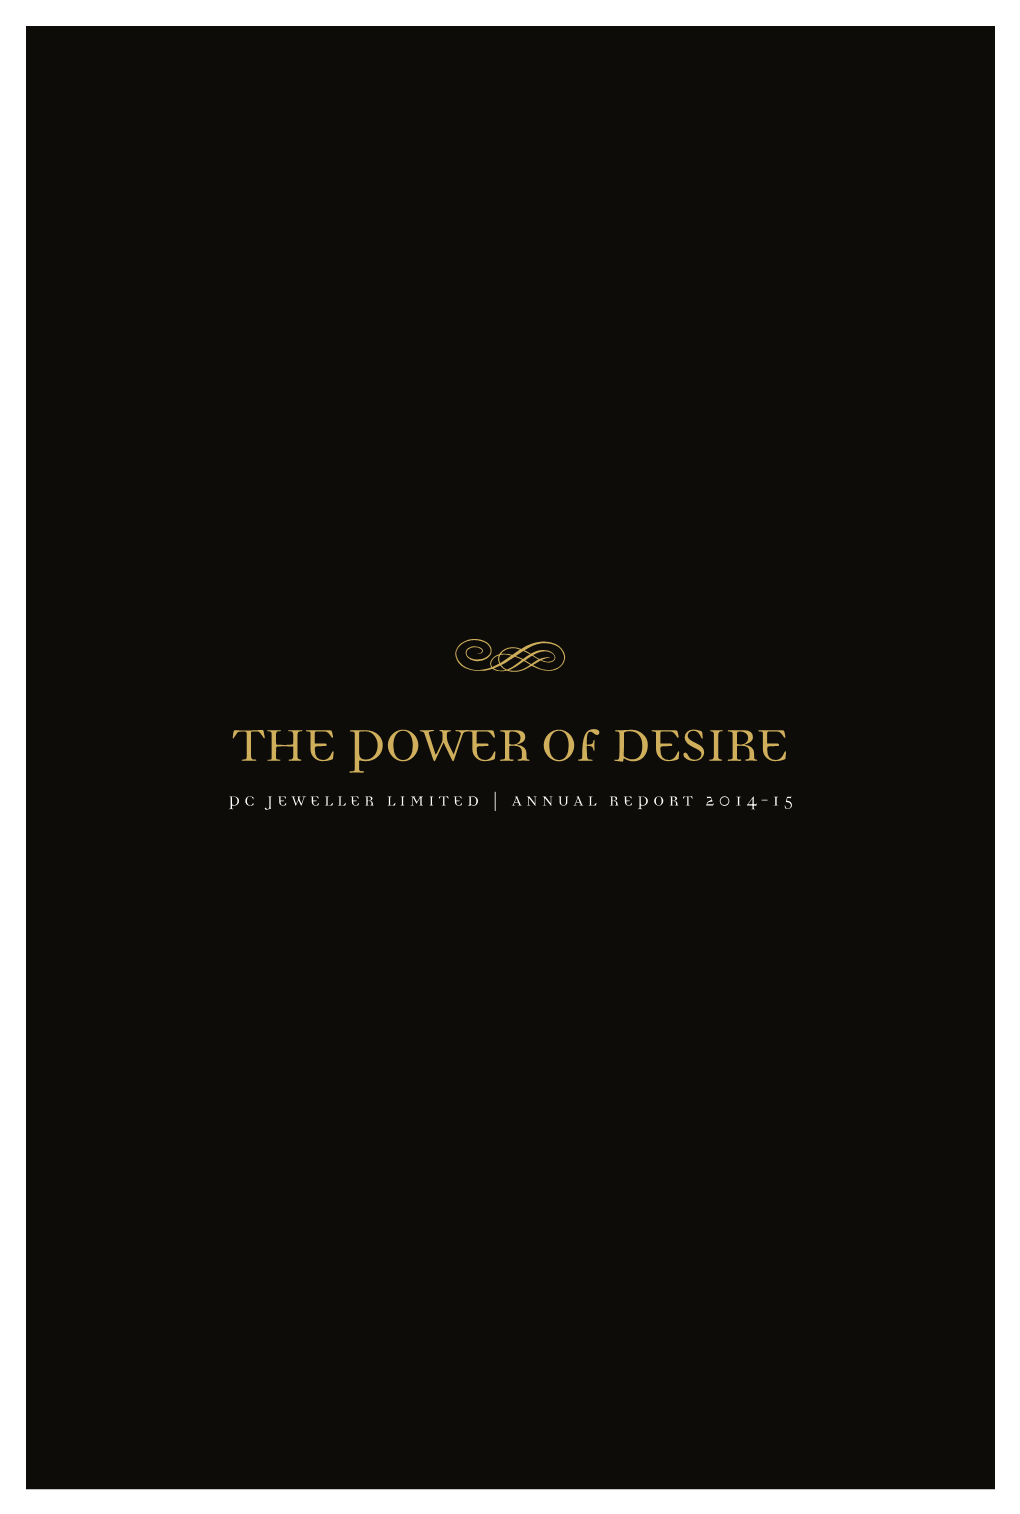 The Power of Desire